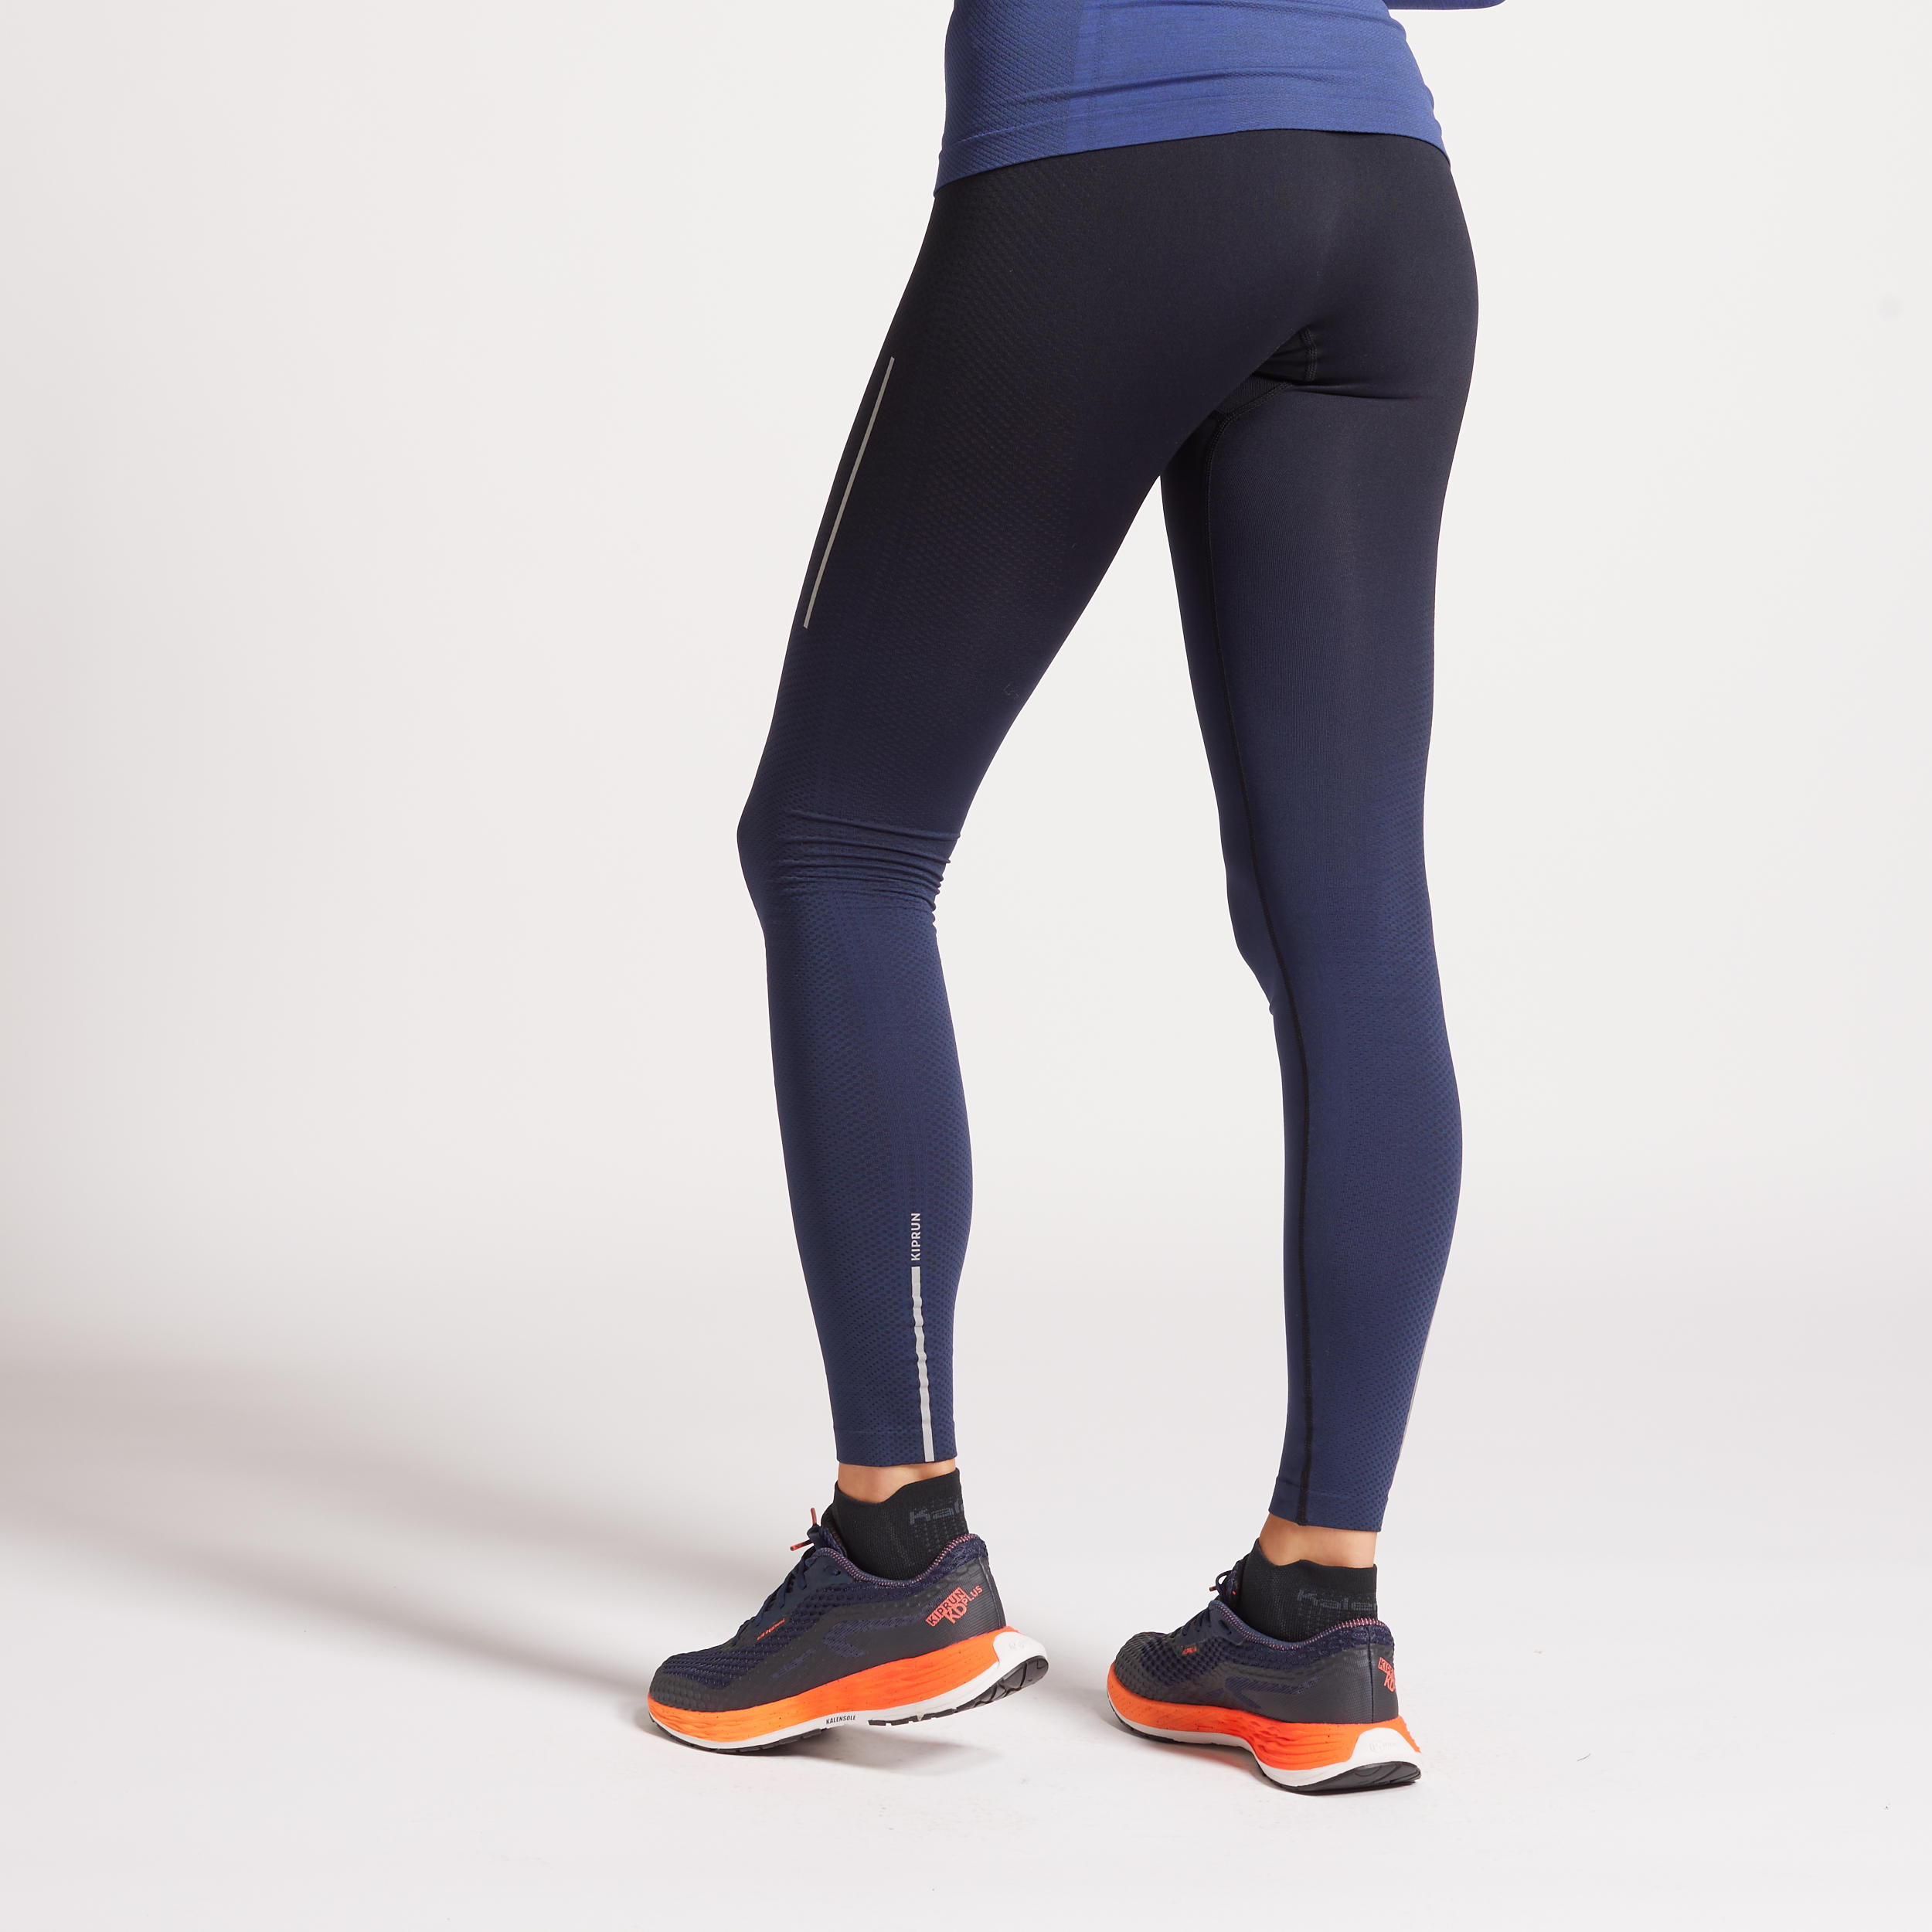 decathlon leggings size S 360 cardio compression activewear training | eBay